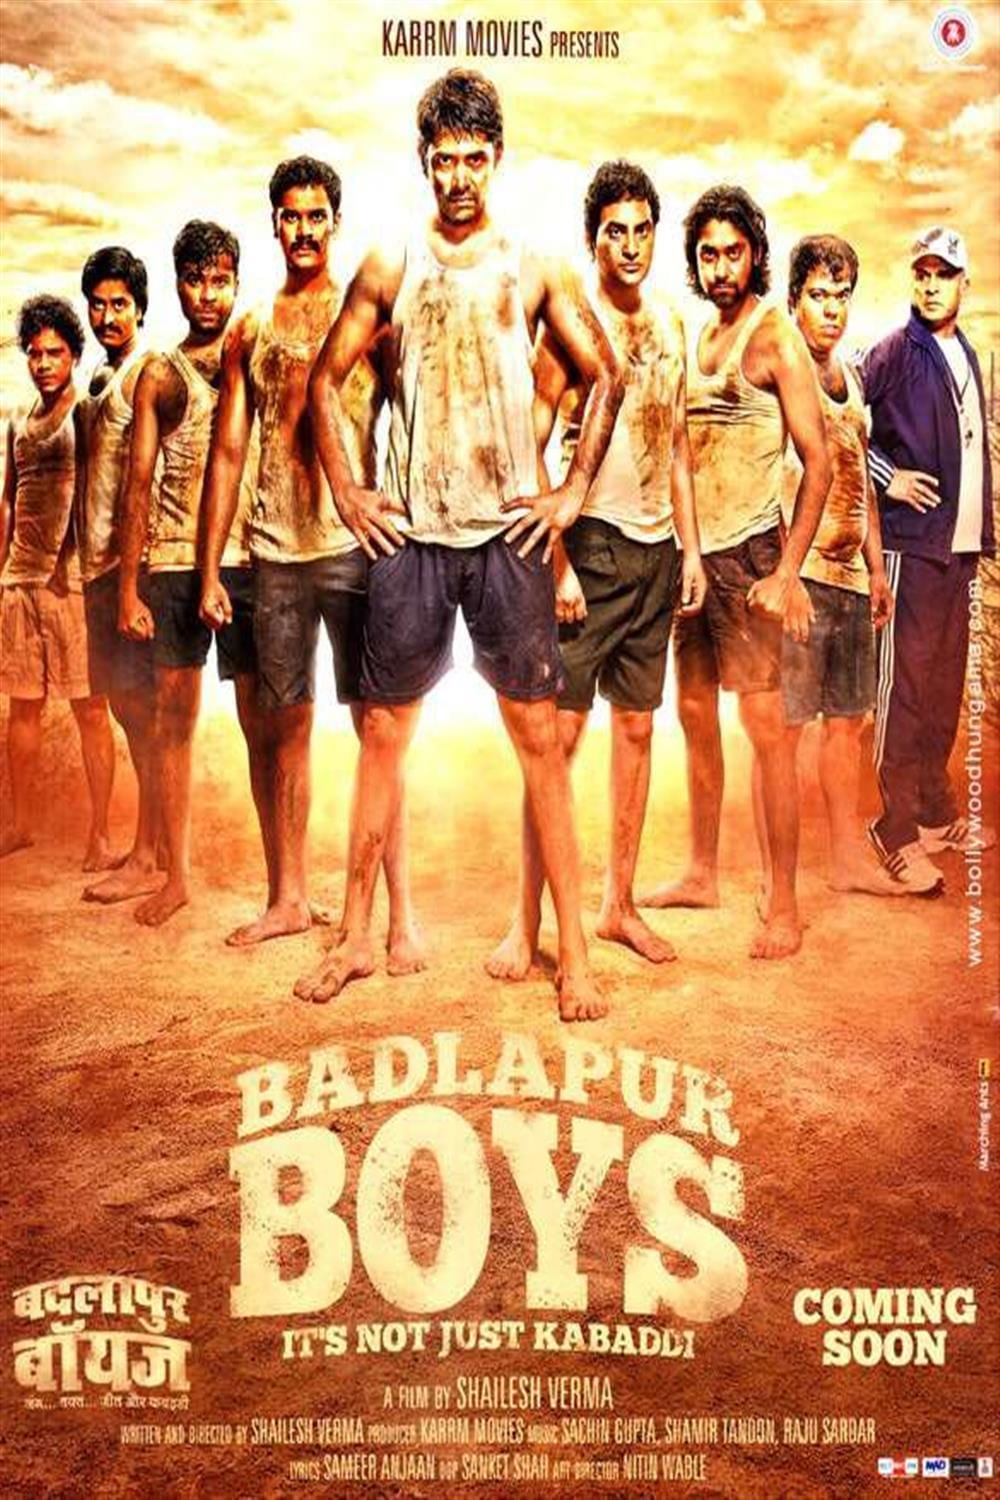 Poster for the movie "Badlapur Boys"